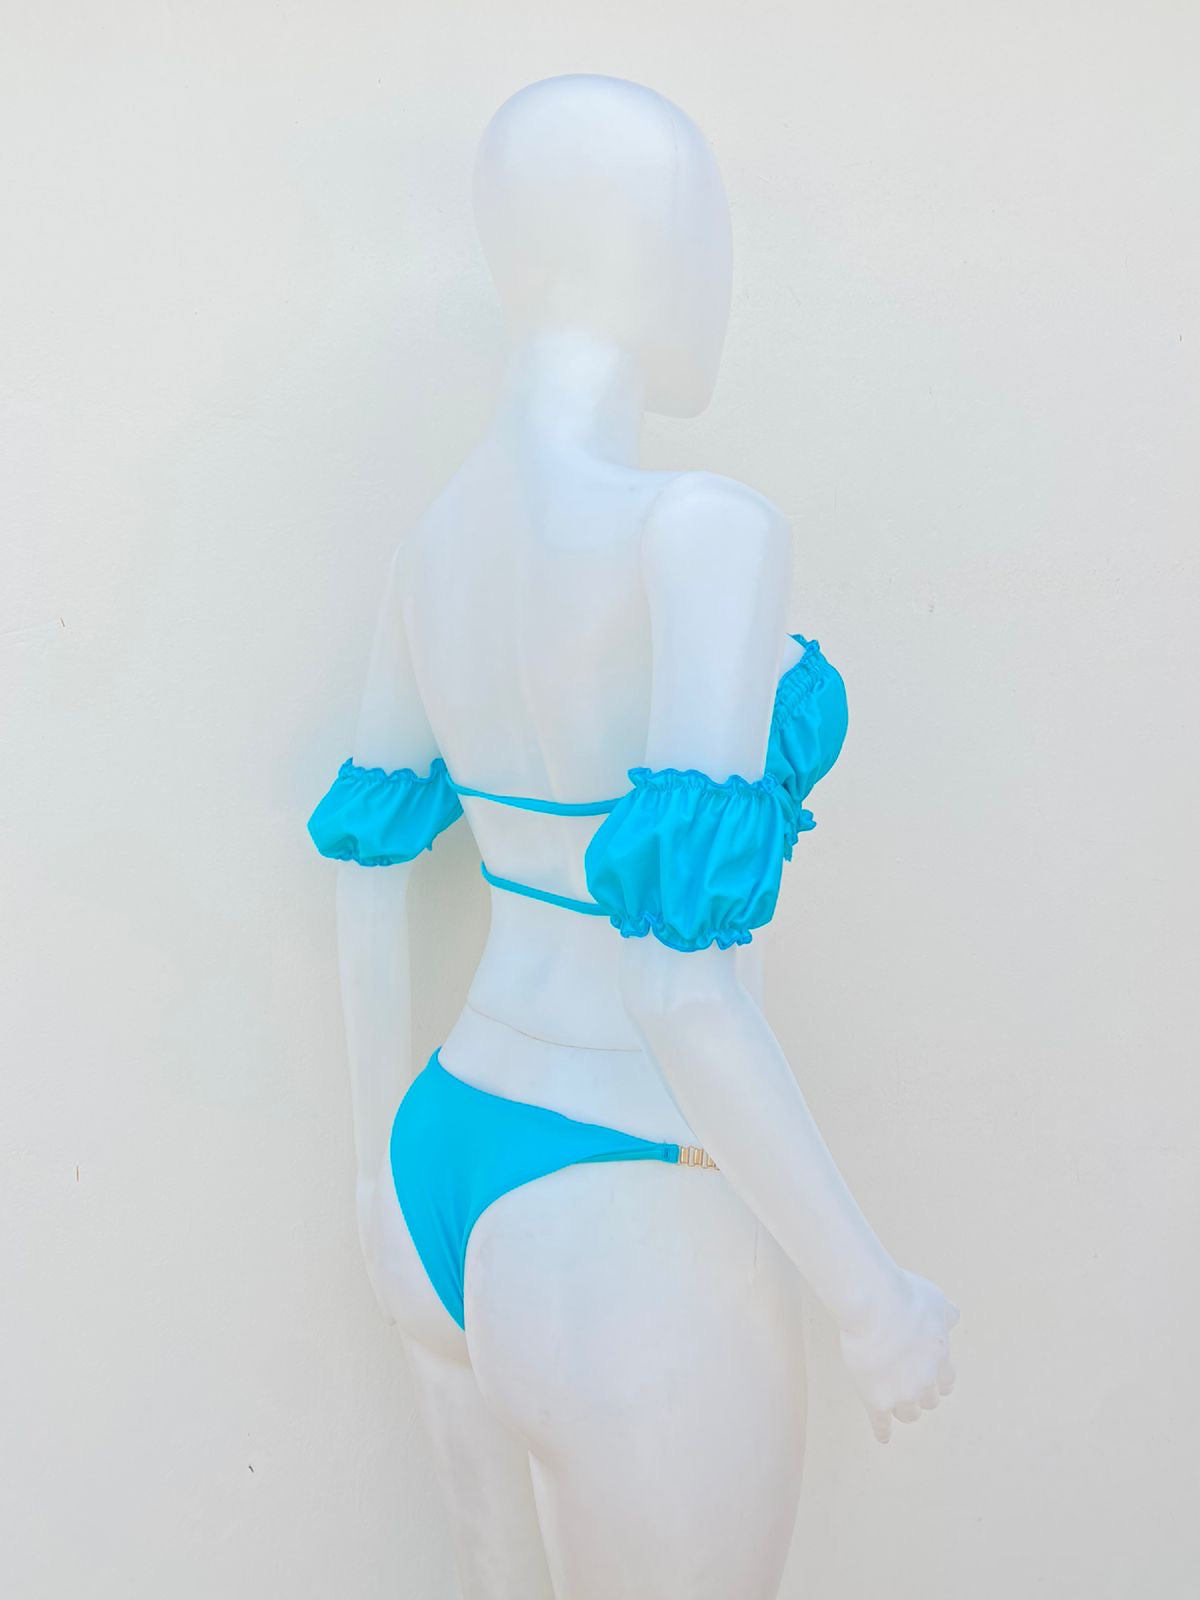 Biquini Mermaid Swimwear original azul turquesa con detalles dorado.